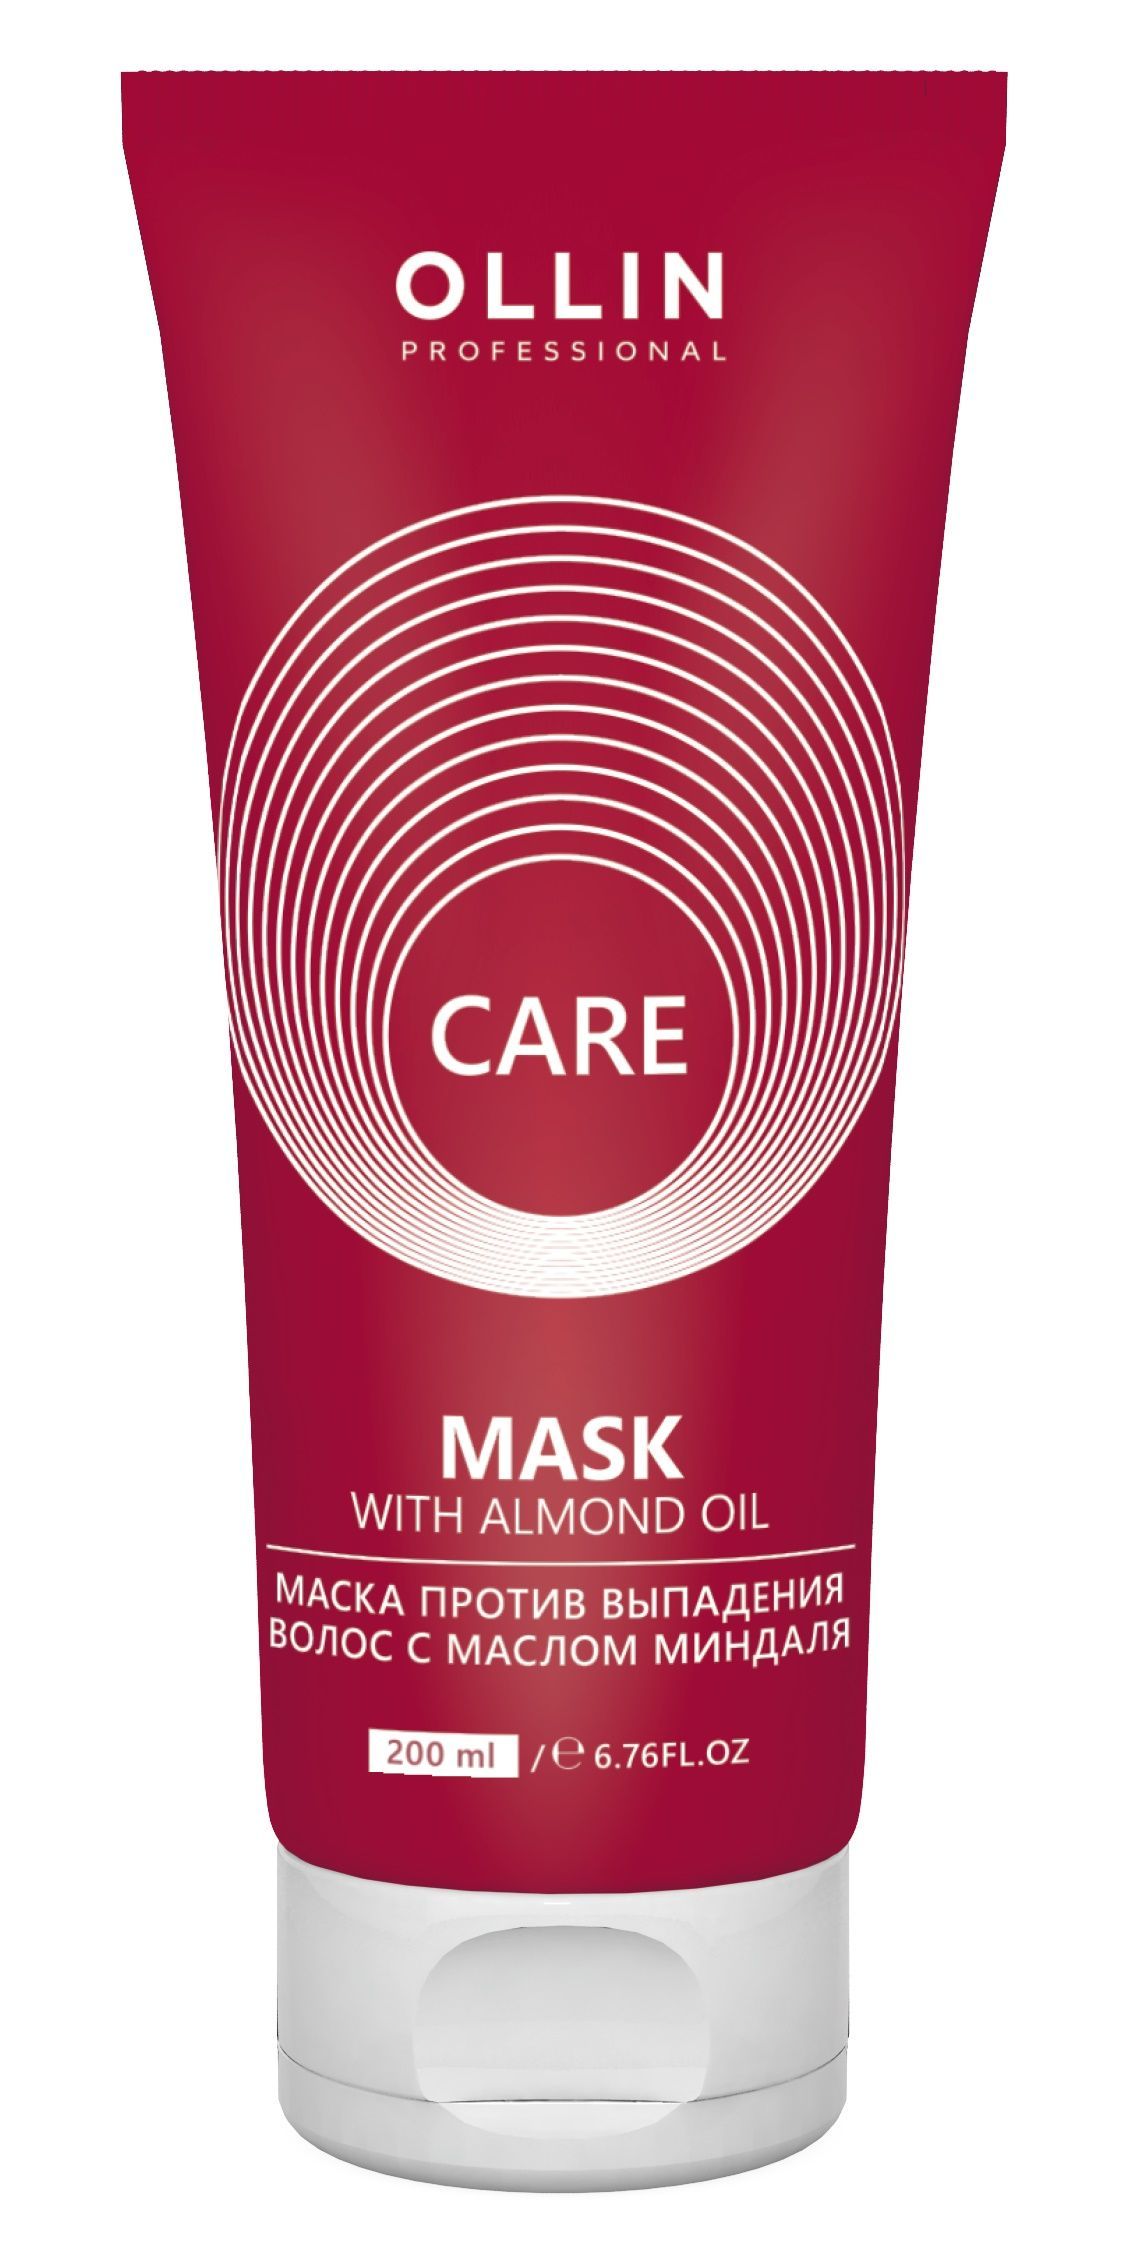 Ollin, Маска для волос с маслом миндаля «Almond Oil Mask» серии «Care», Фото интернет-магазин Премиум-Косметика.РФ